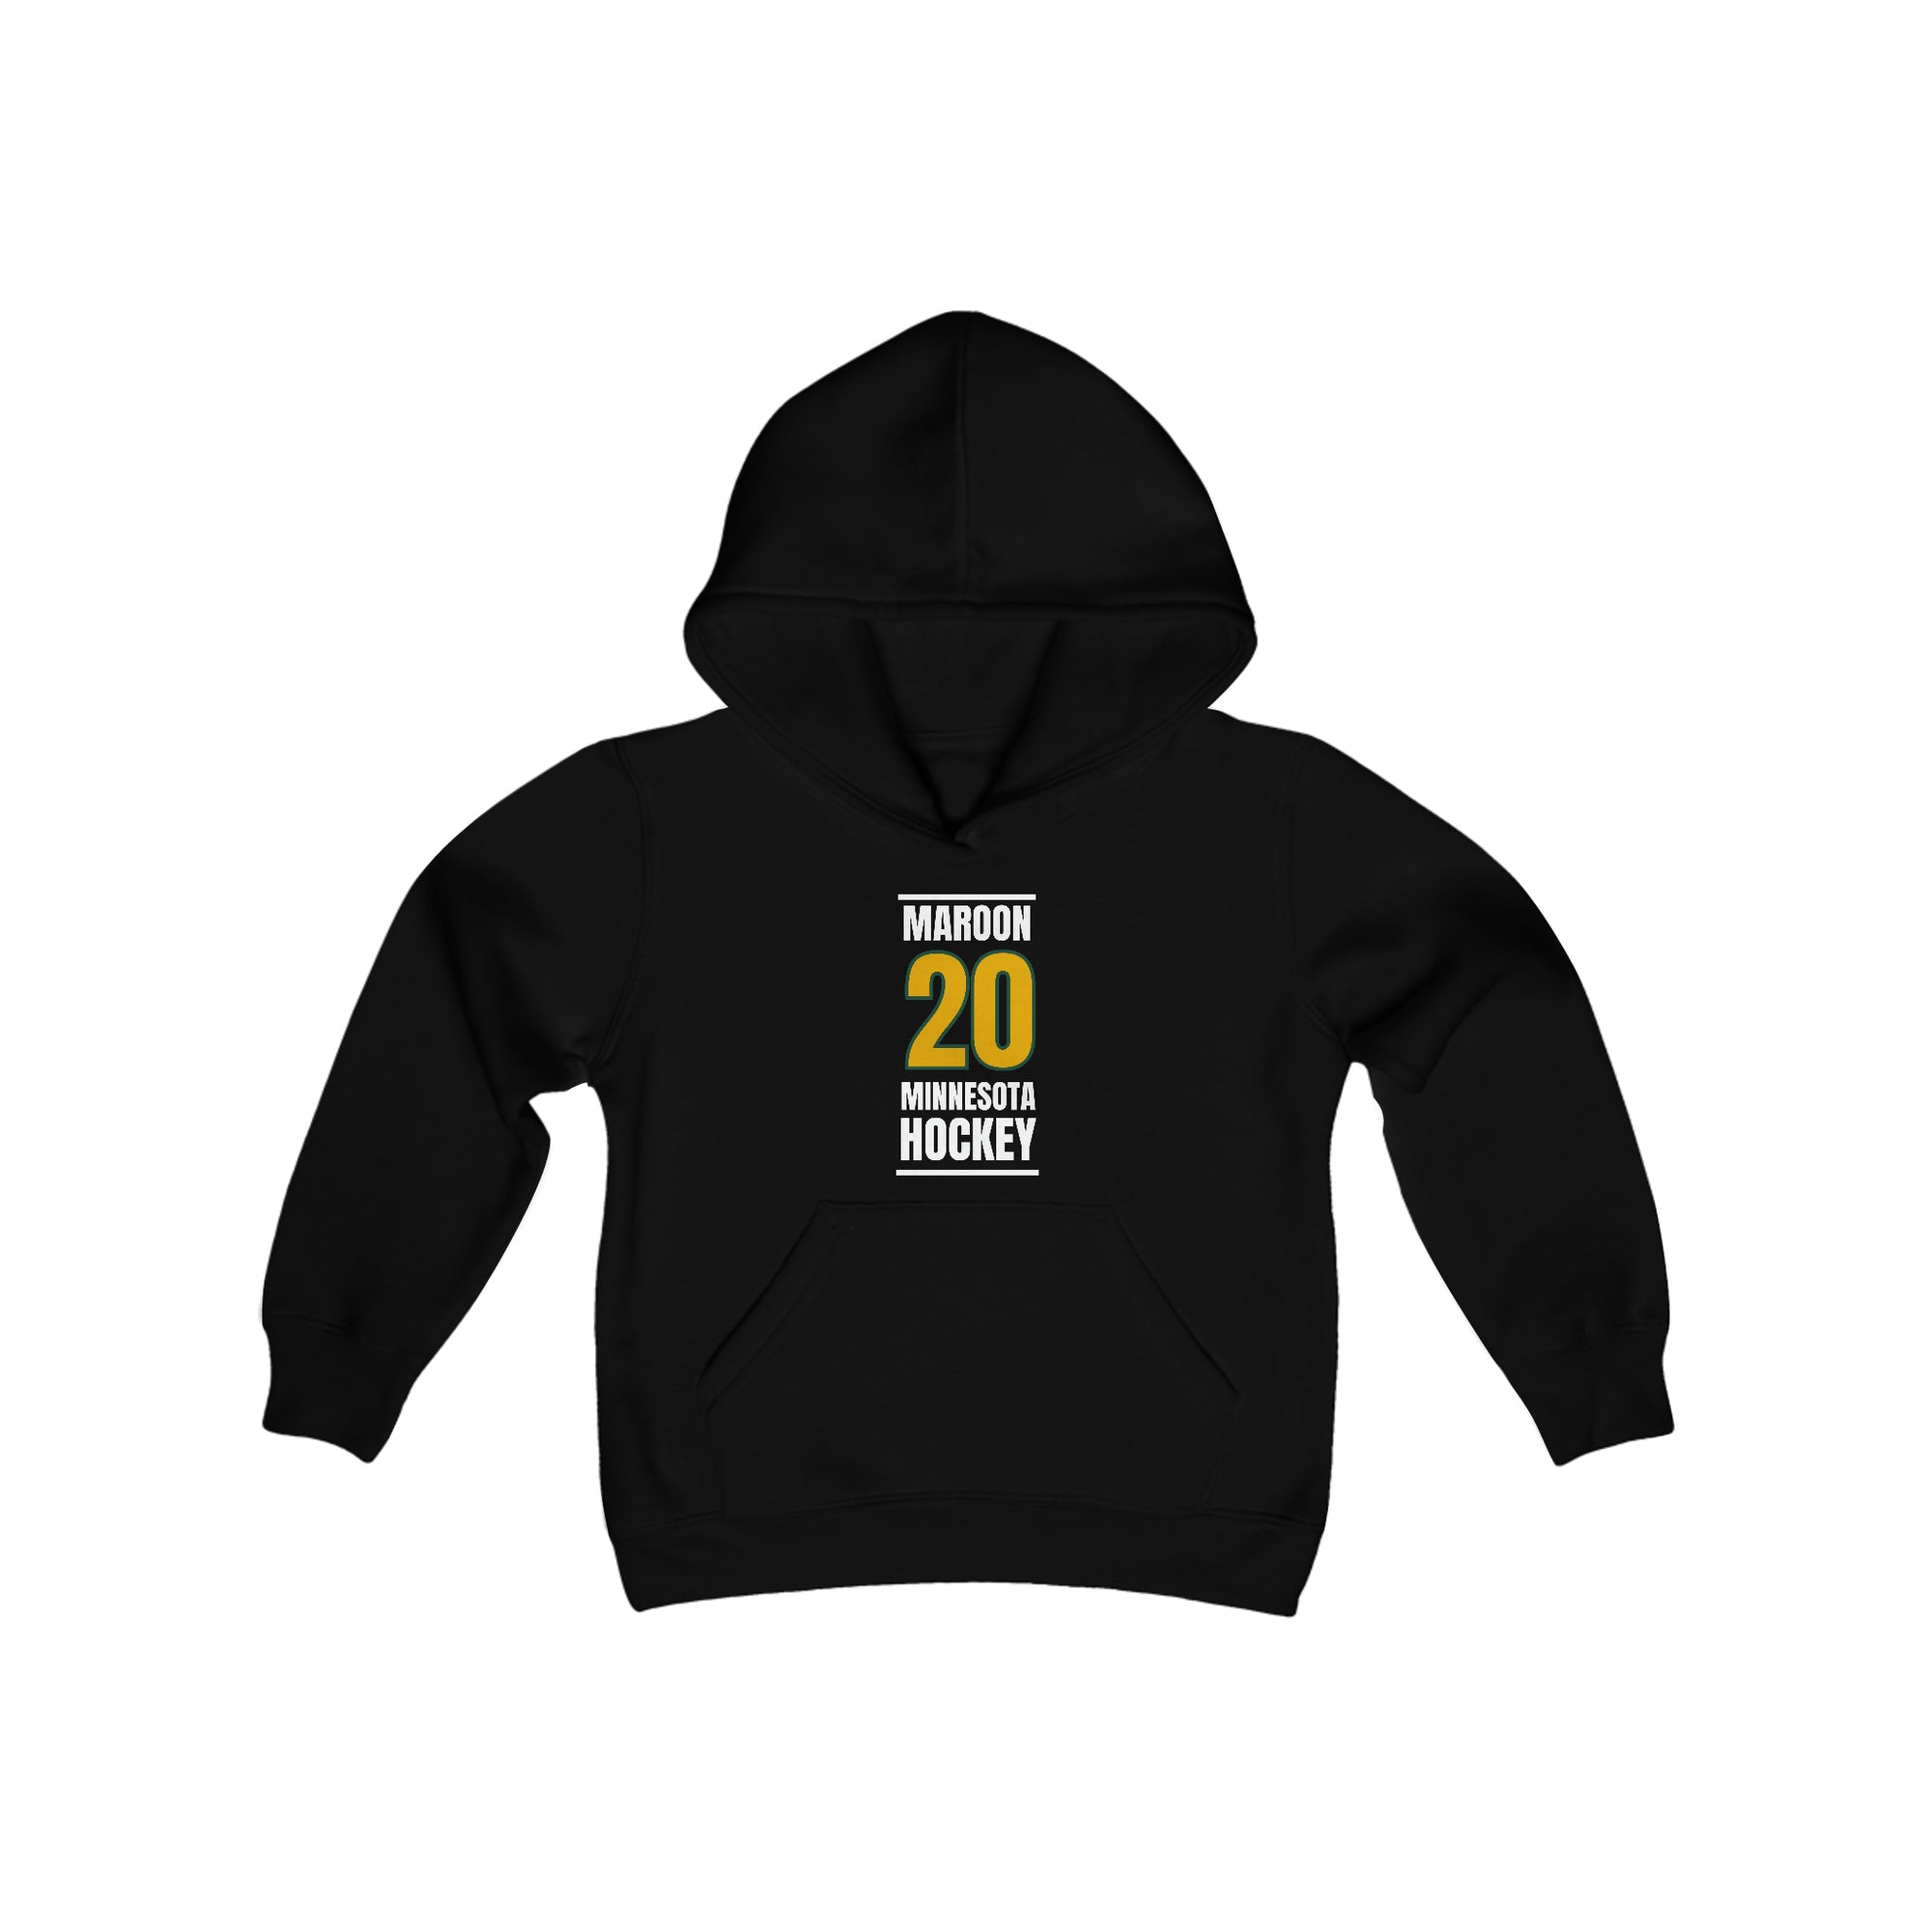 Maroon 20 Minnesota Hockey Gold Vertical Design Youth Hooded Sweatshirt